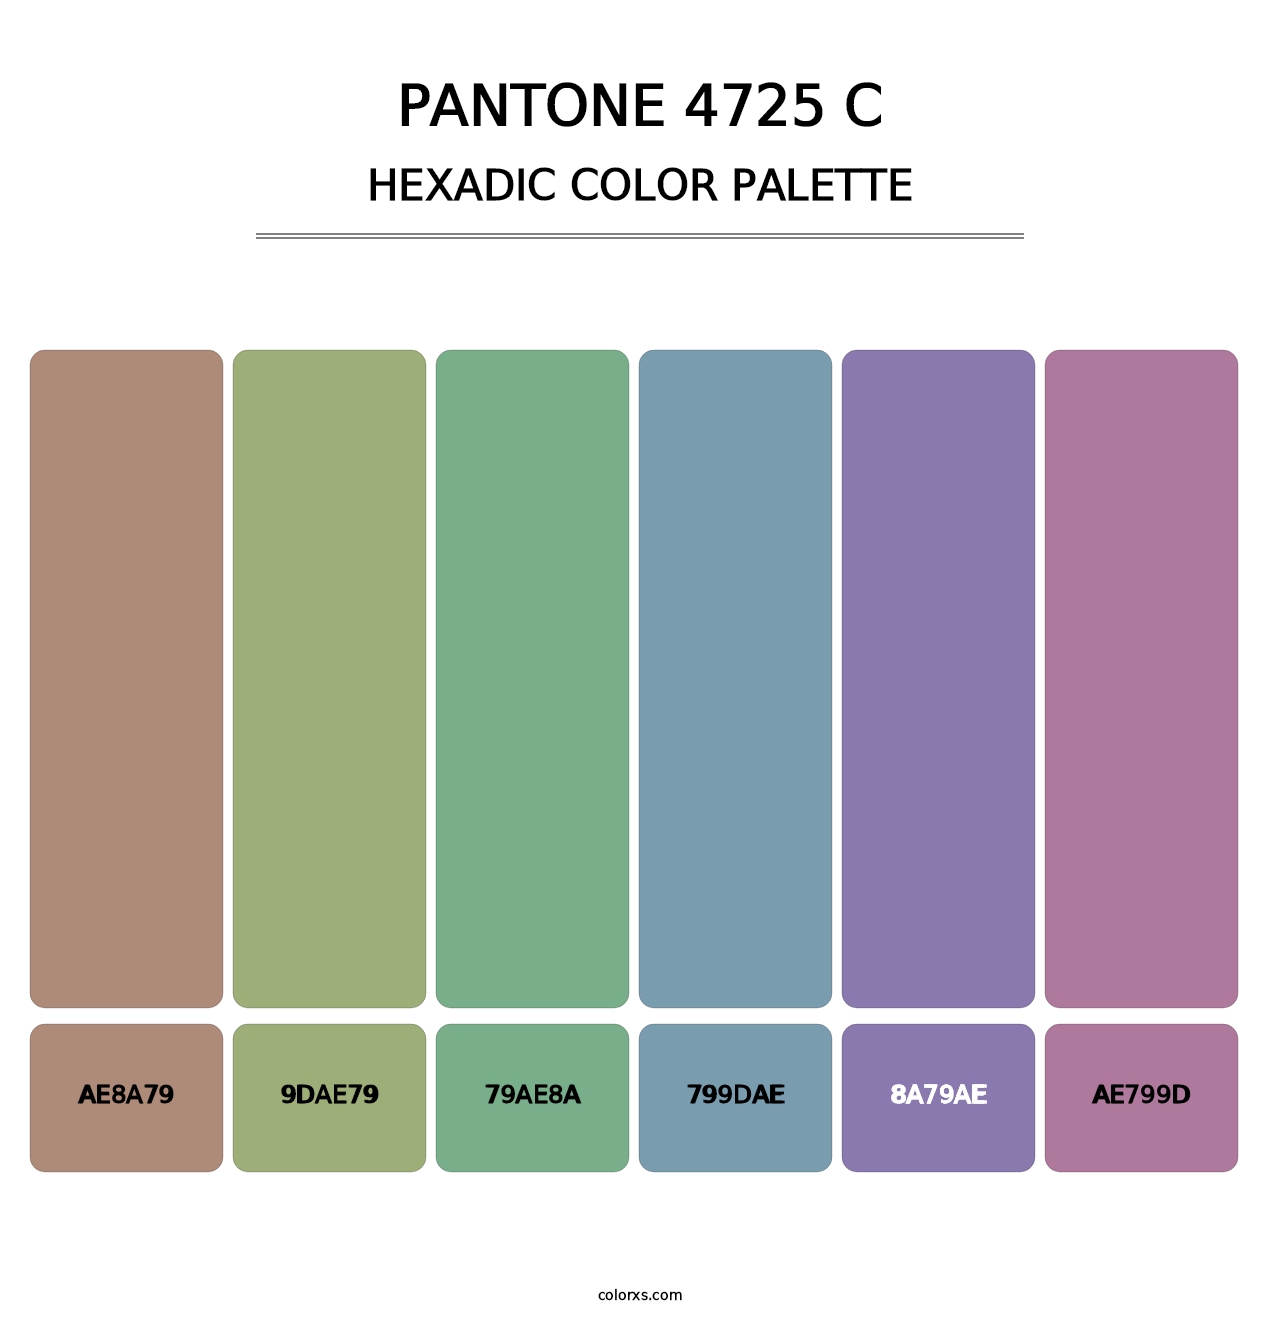 PANTONE 4725 C - Hexadic Color Palette